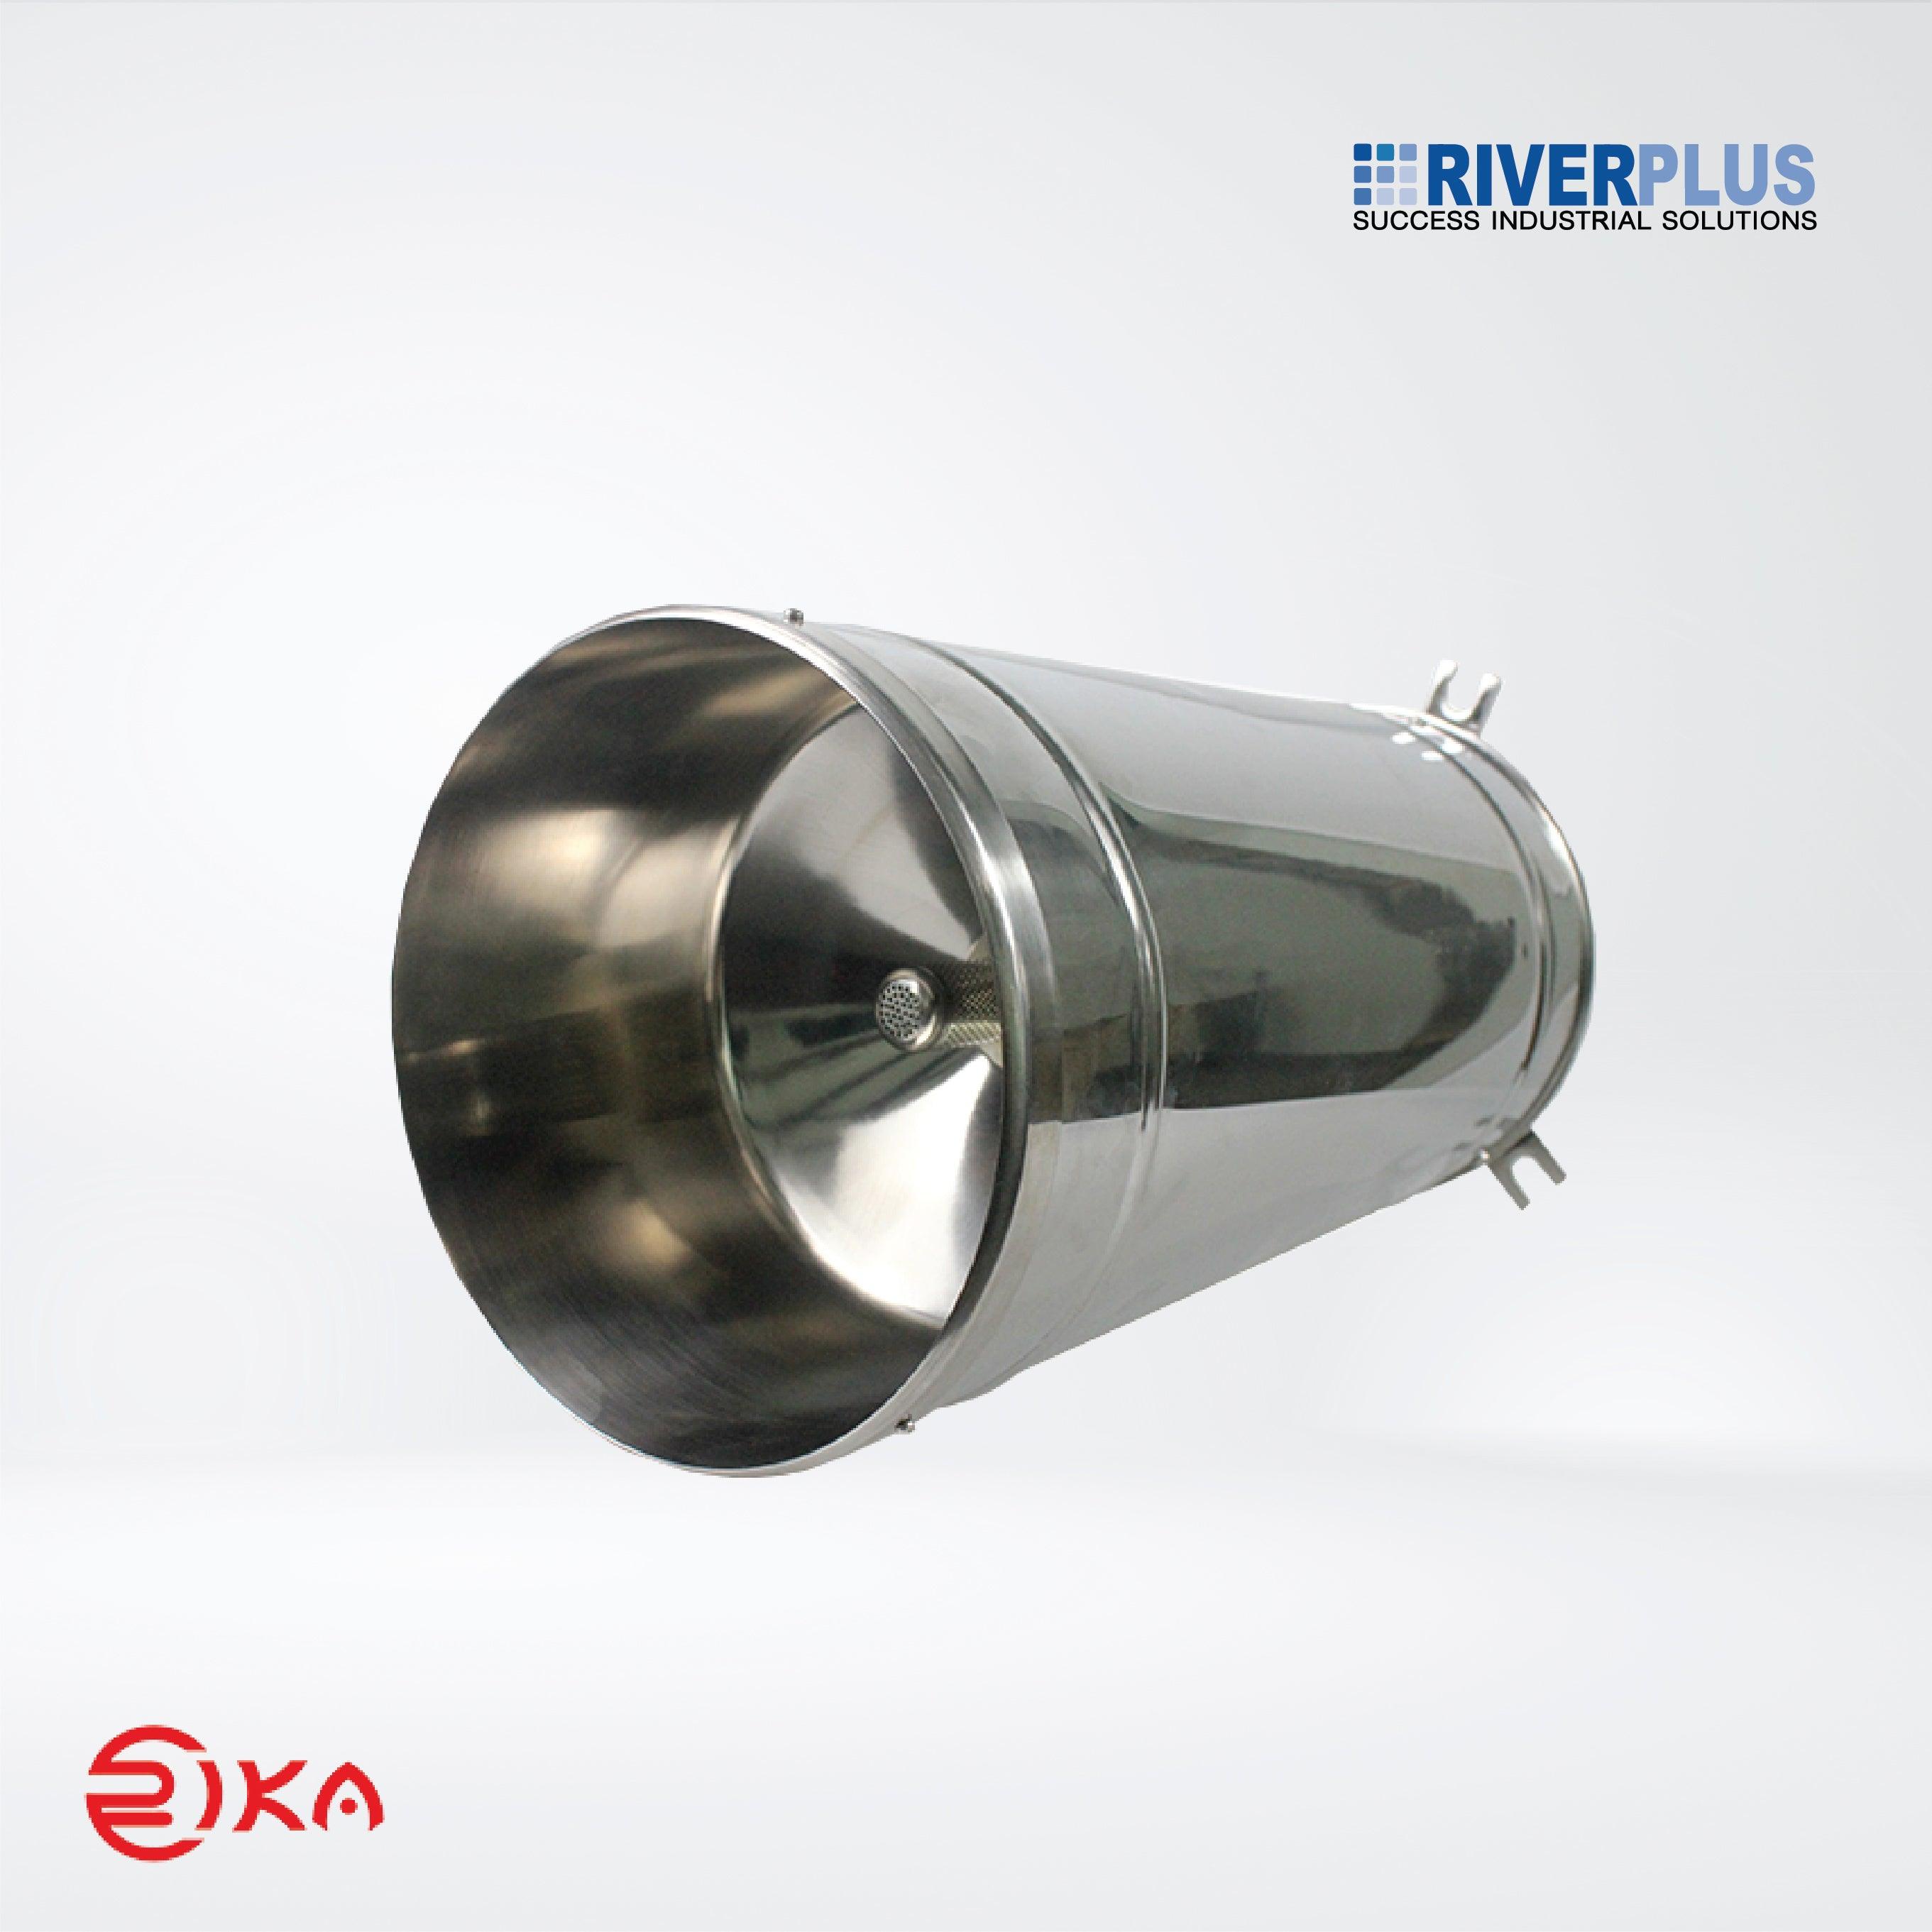 RK400-07 Tipping Bucket Rainfall Sensor - Riverplus